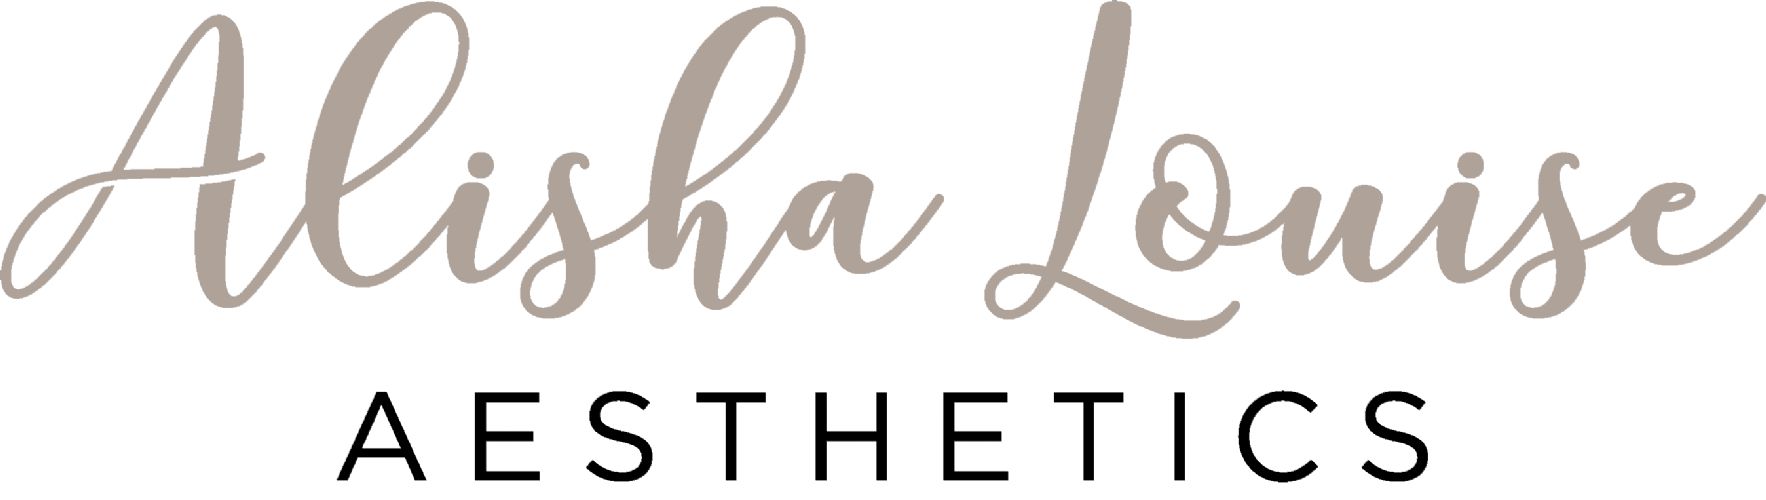 Alisha Louise Aesthetics Banner